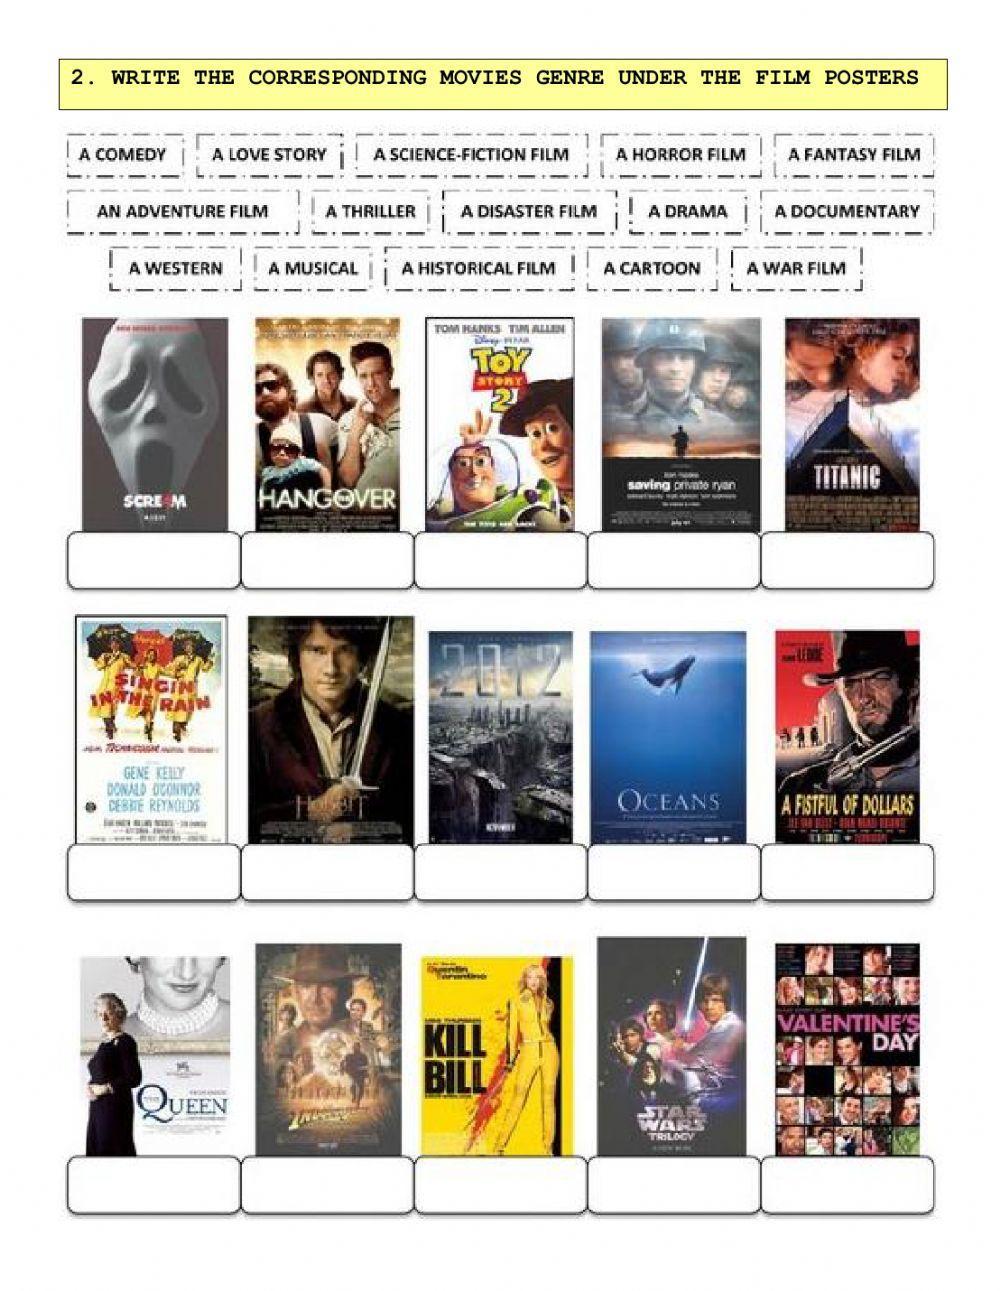 Movies genres